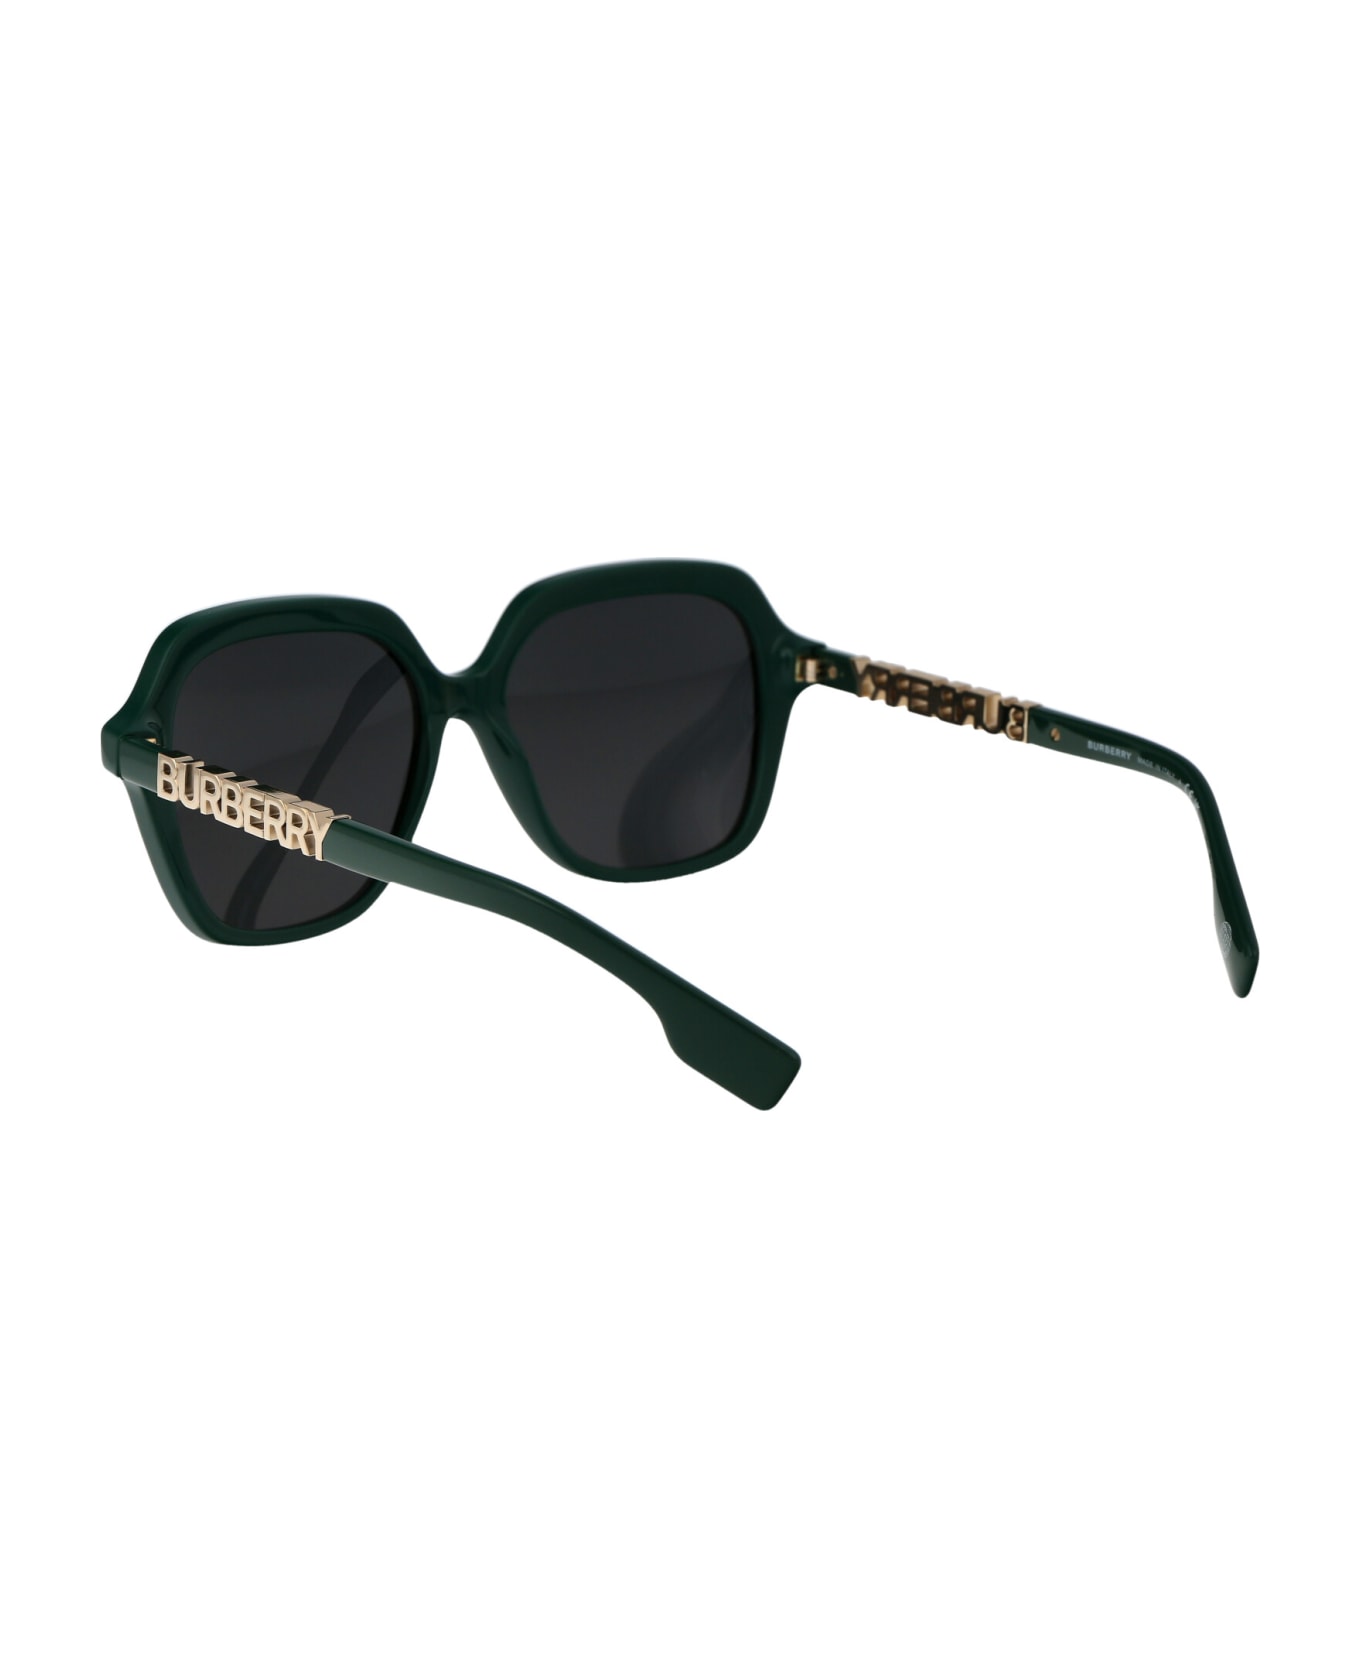 Burberry Eyewear Joni Sunglasses - 405987 Green